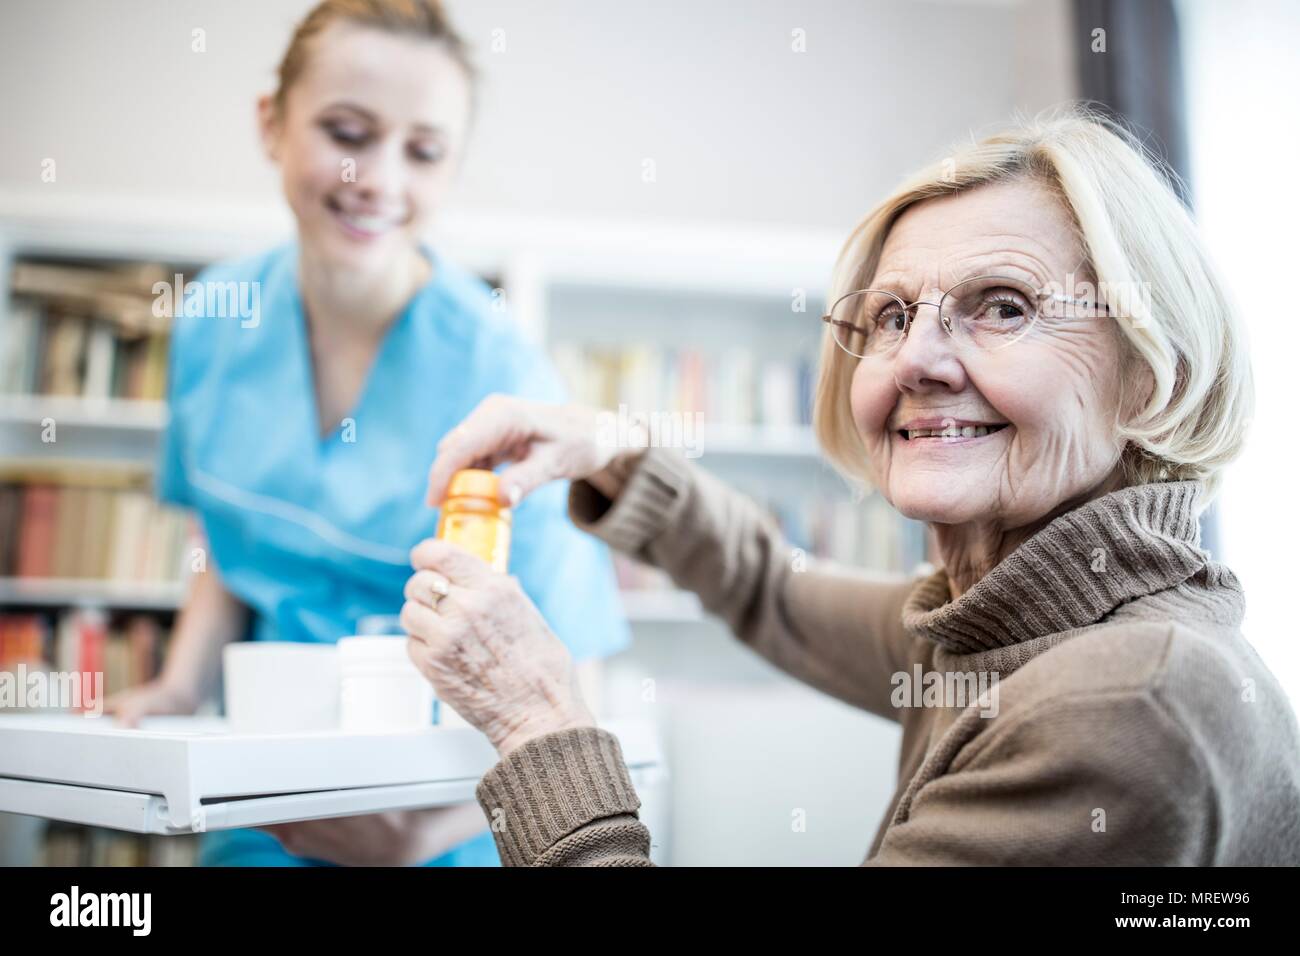 Senior woman opening medicine bottle and smiling. Stock Photo